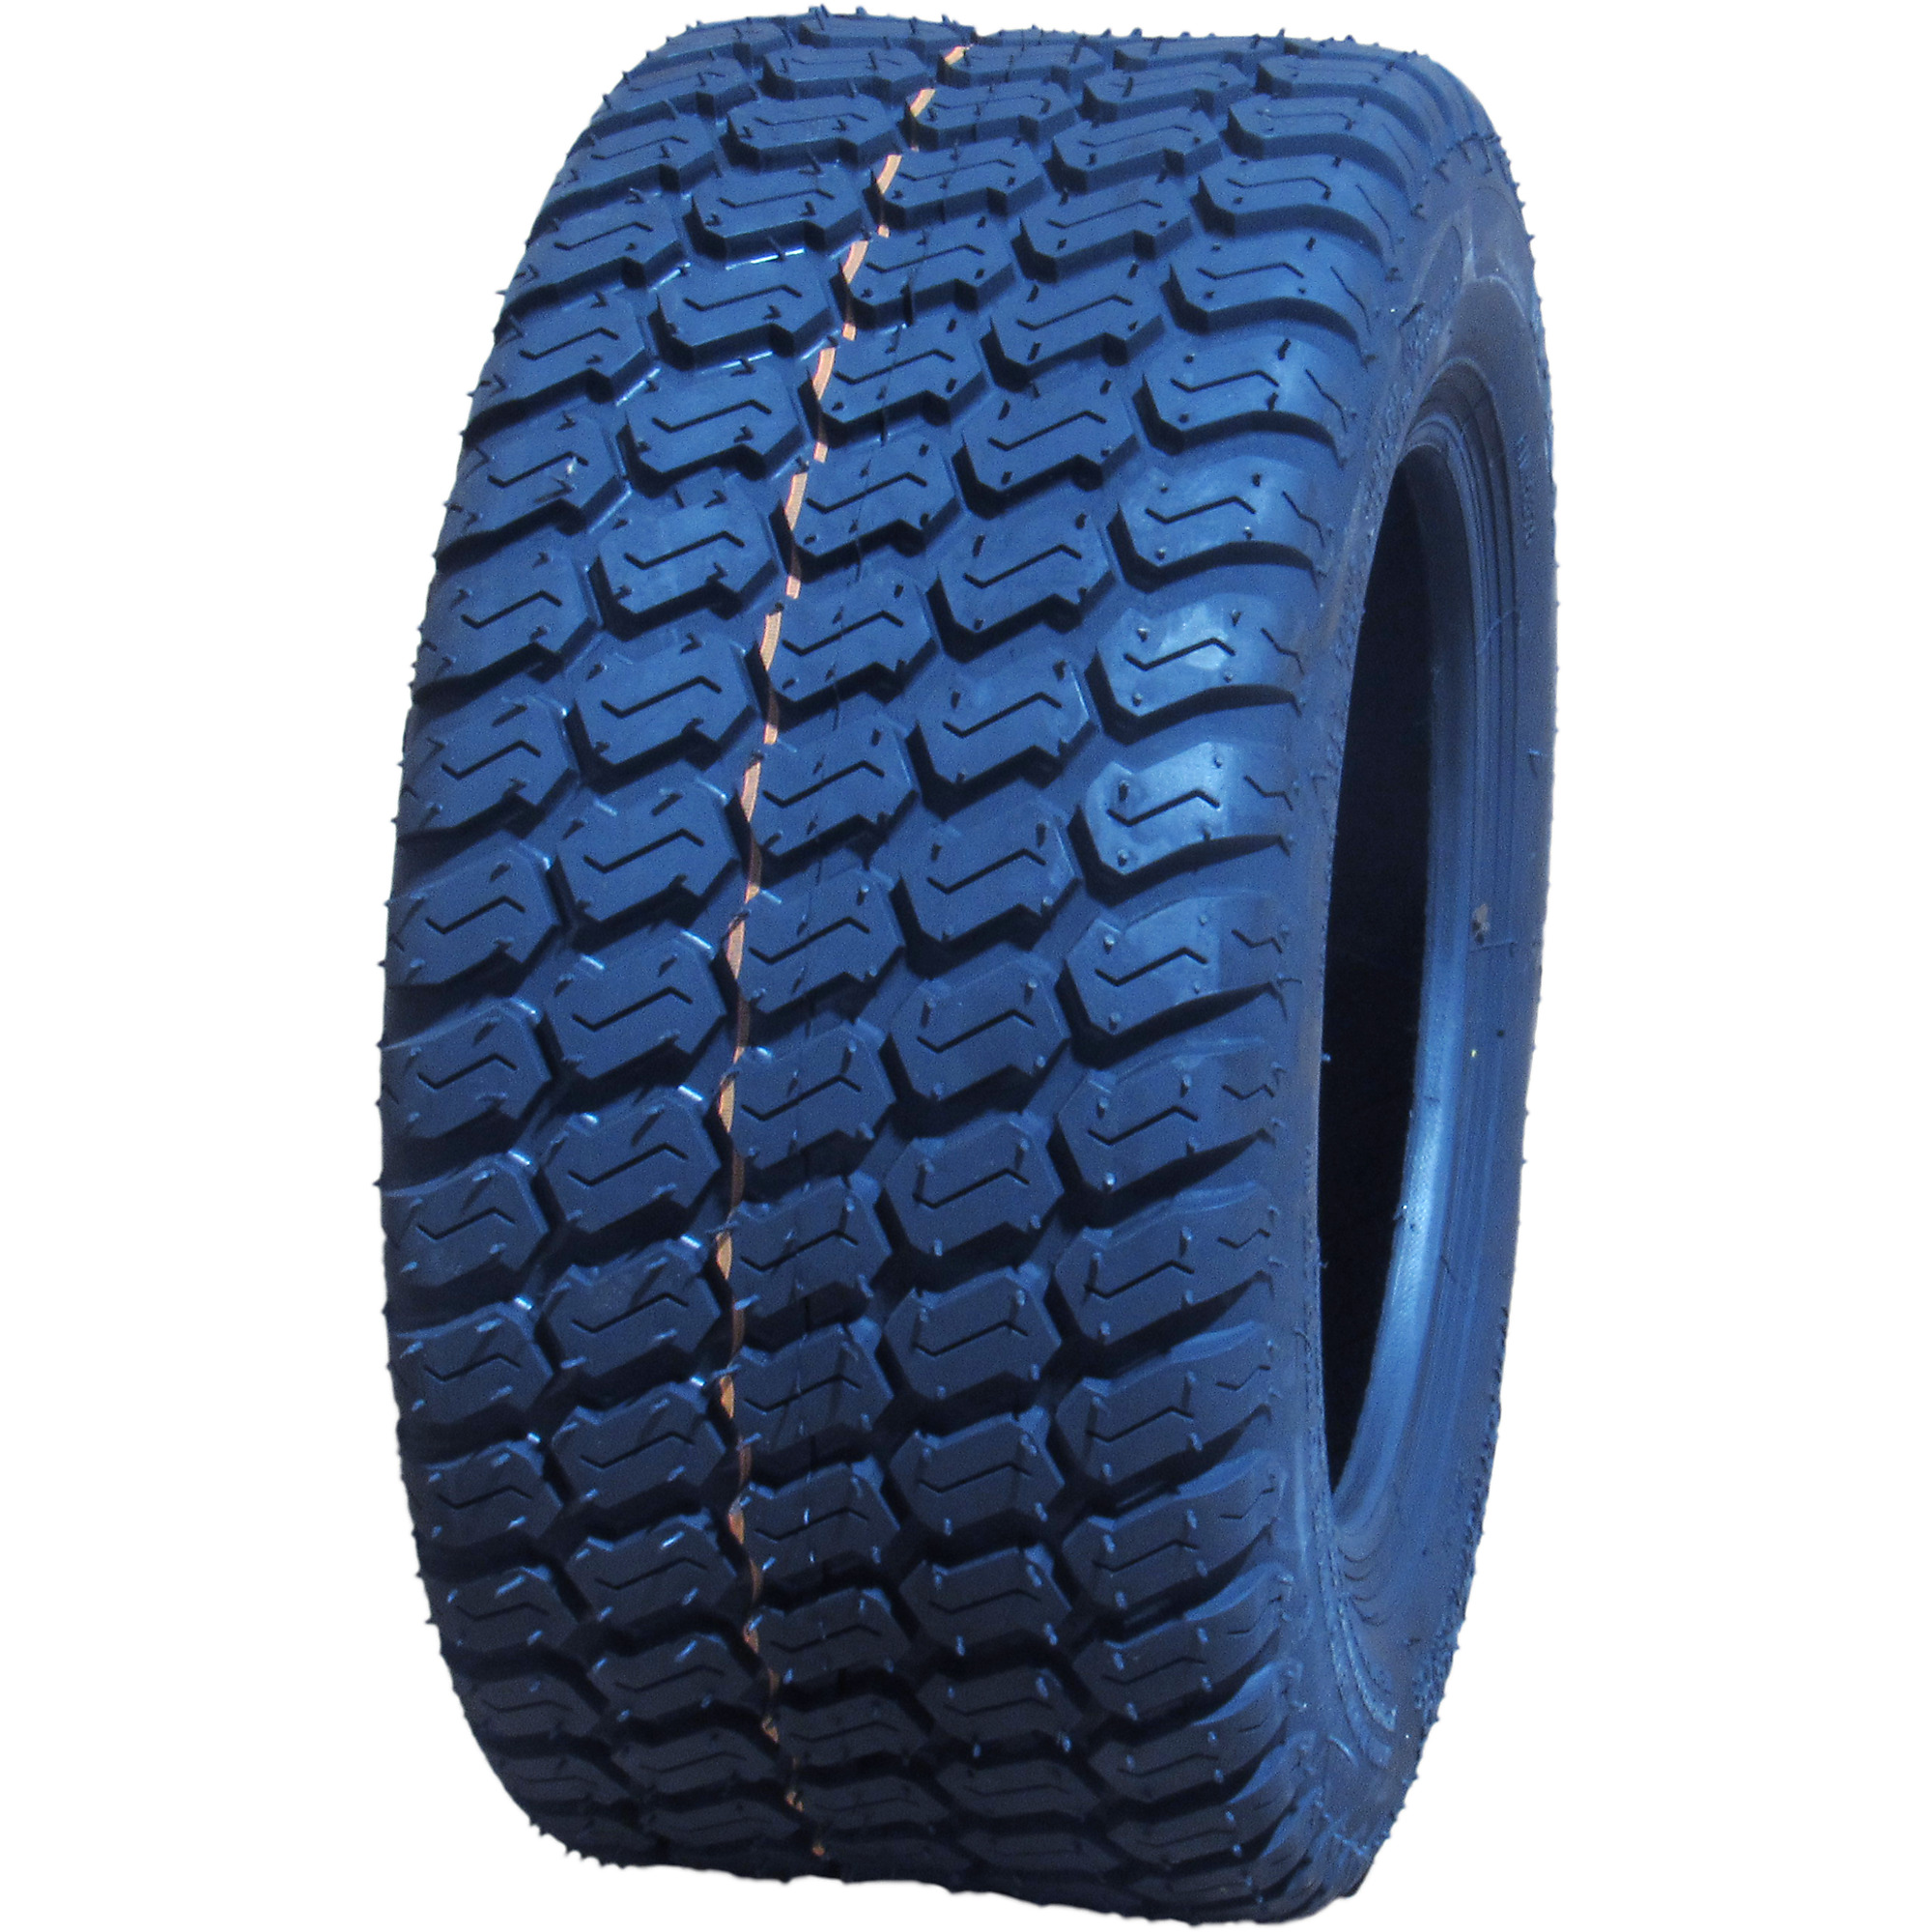 HI-RUN, Lawn Garden Tire, SU05 Turf, Tire Size 15X6.50-8 Load Range Rating B, Model WD1286